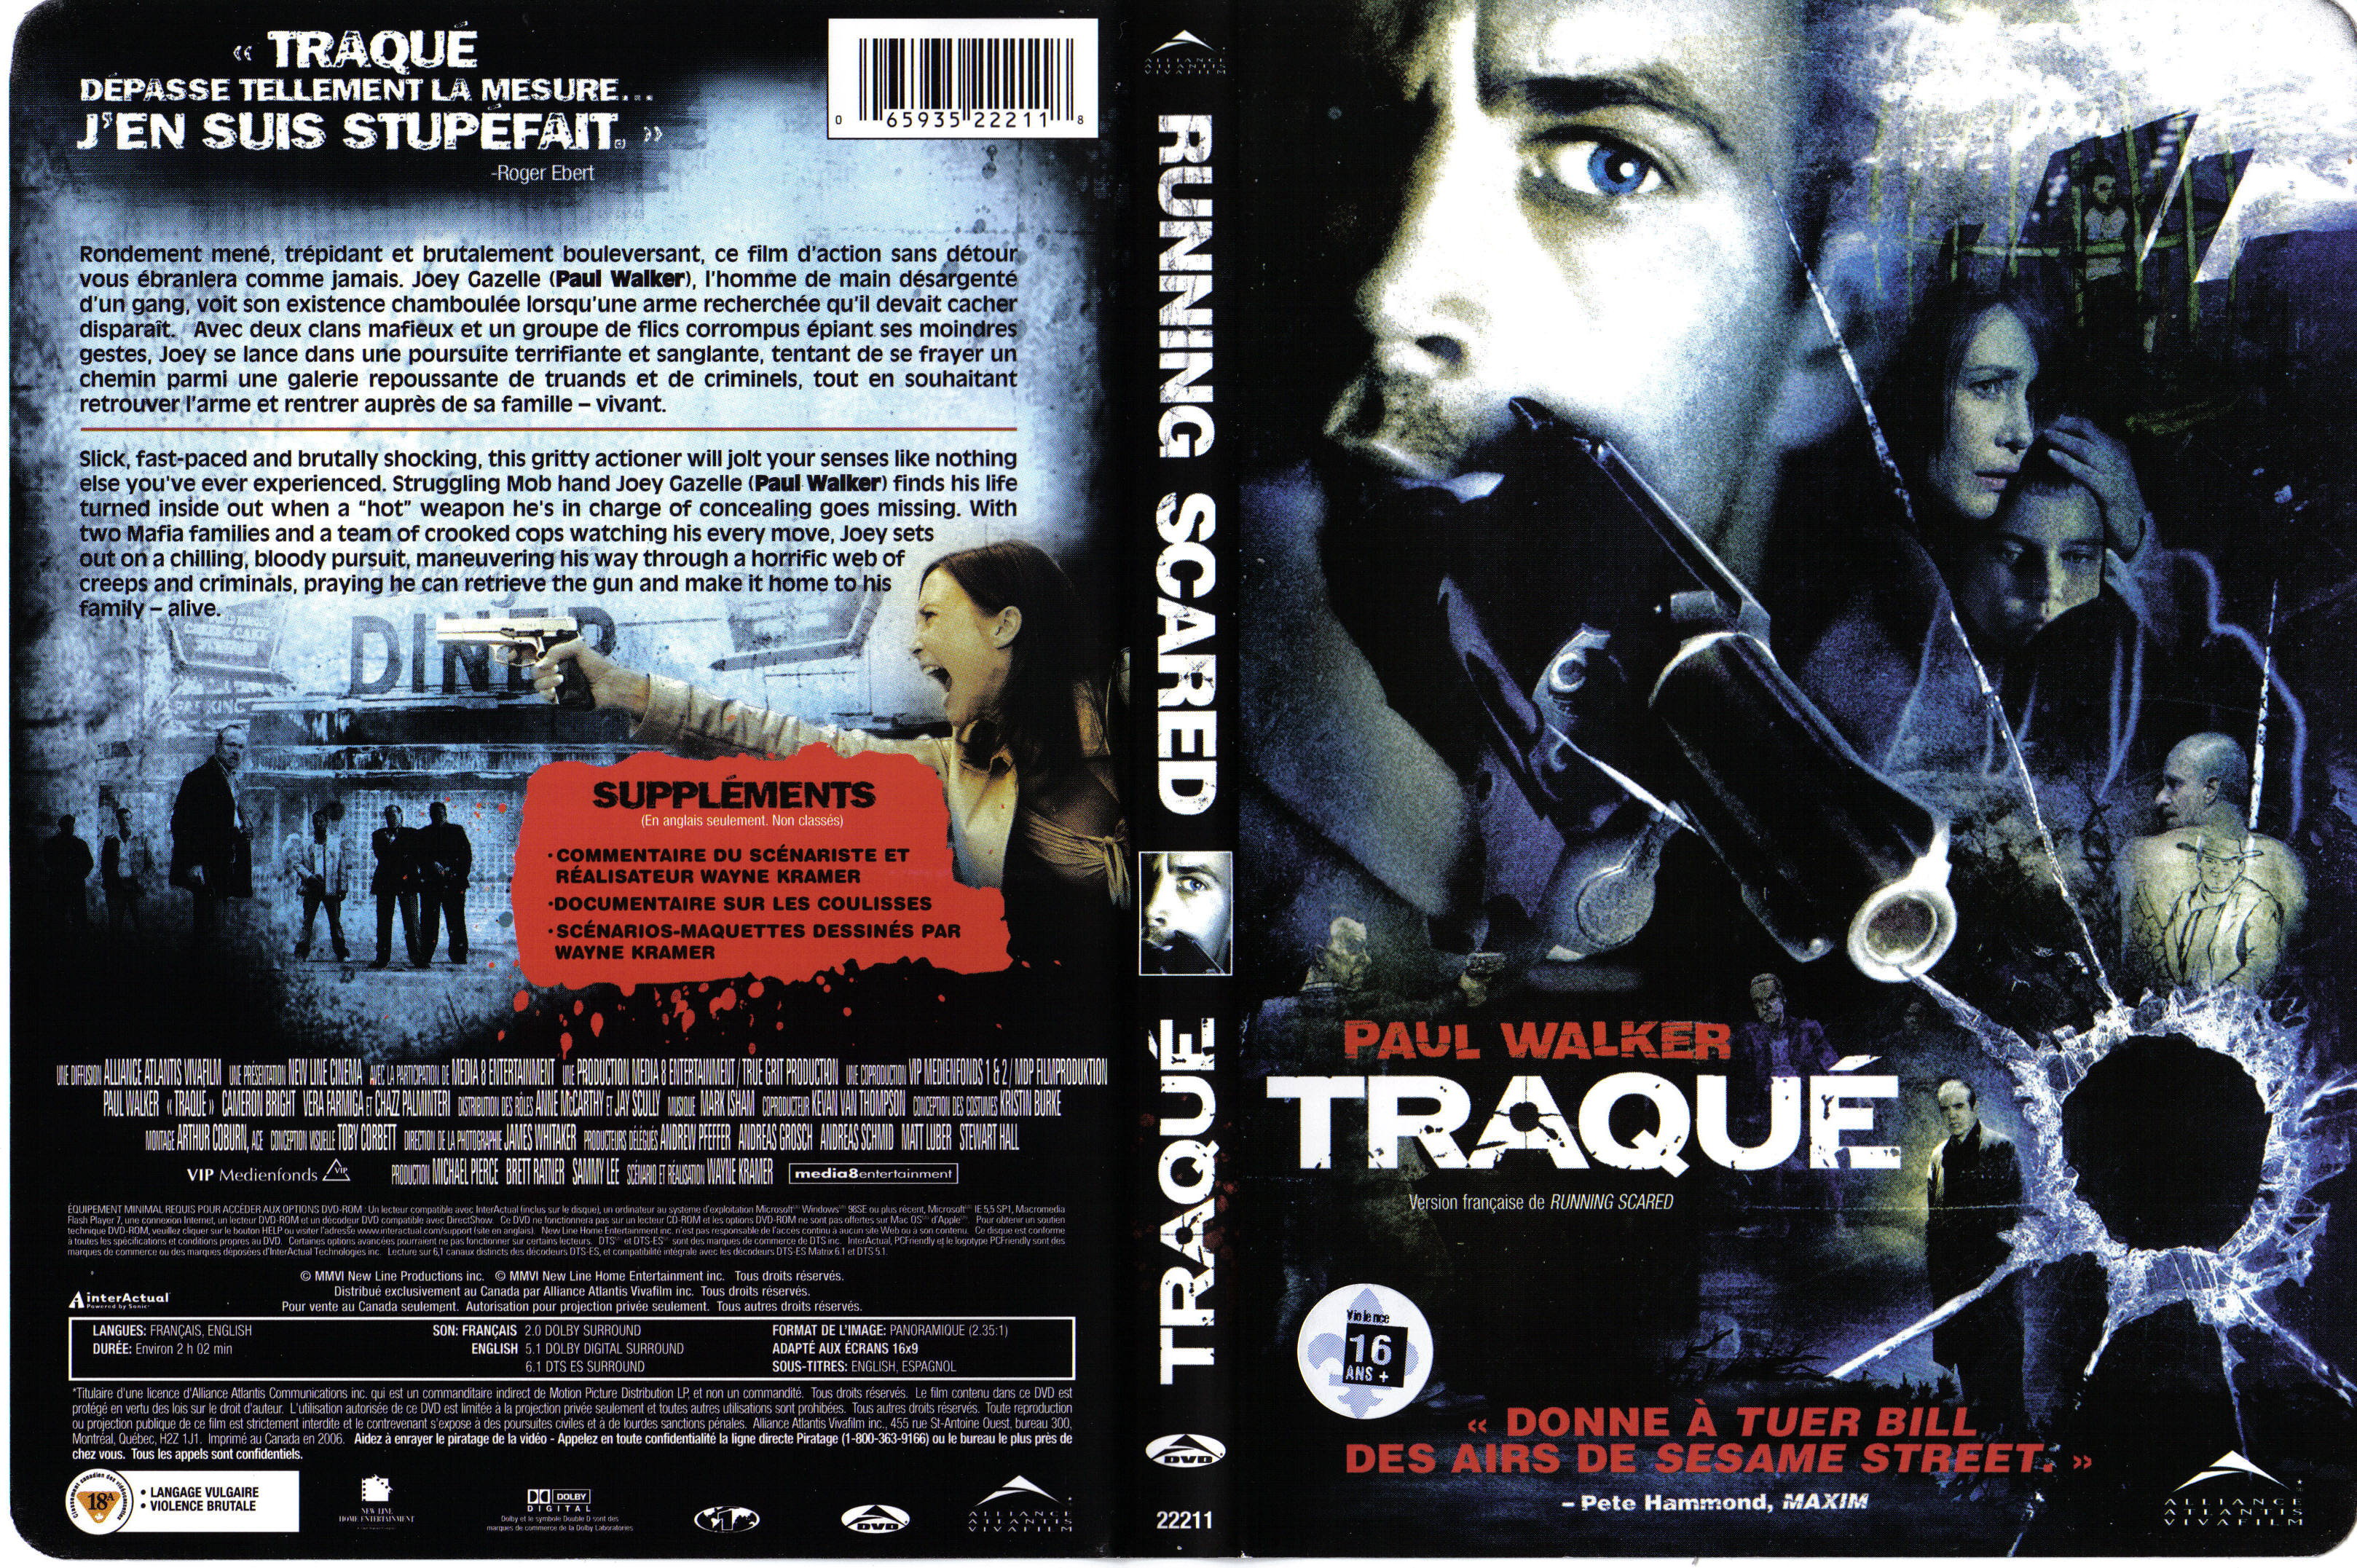 Jaquette DVD Traqu (Paul Walker)